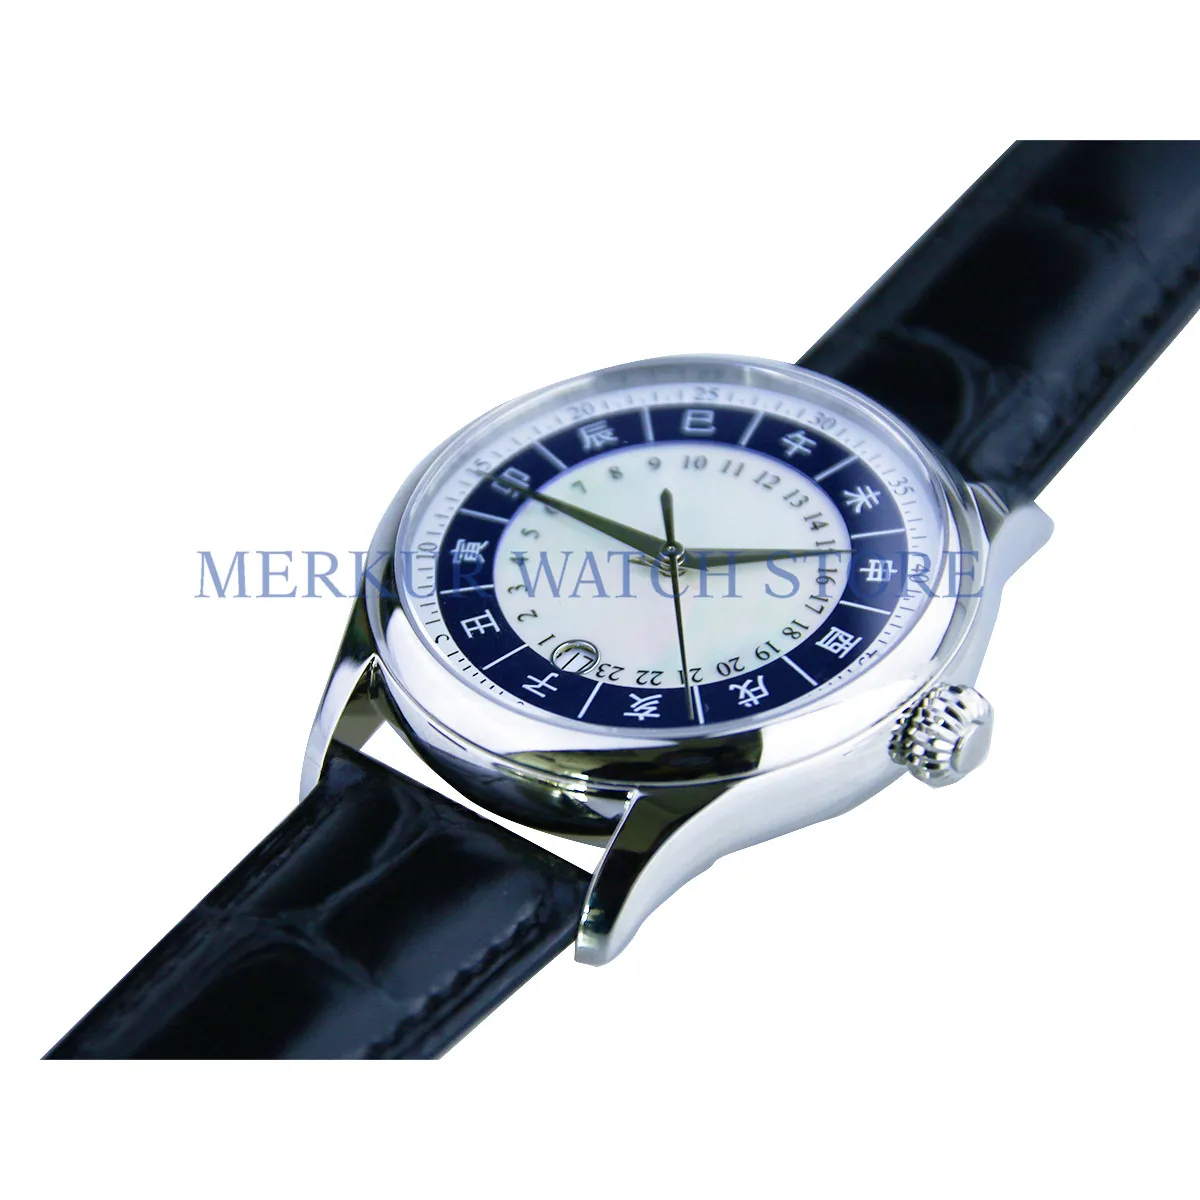 BOND Seagull St2130 Мужские механические наручные часы с календарем